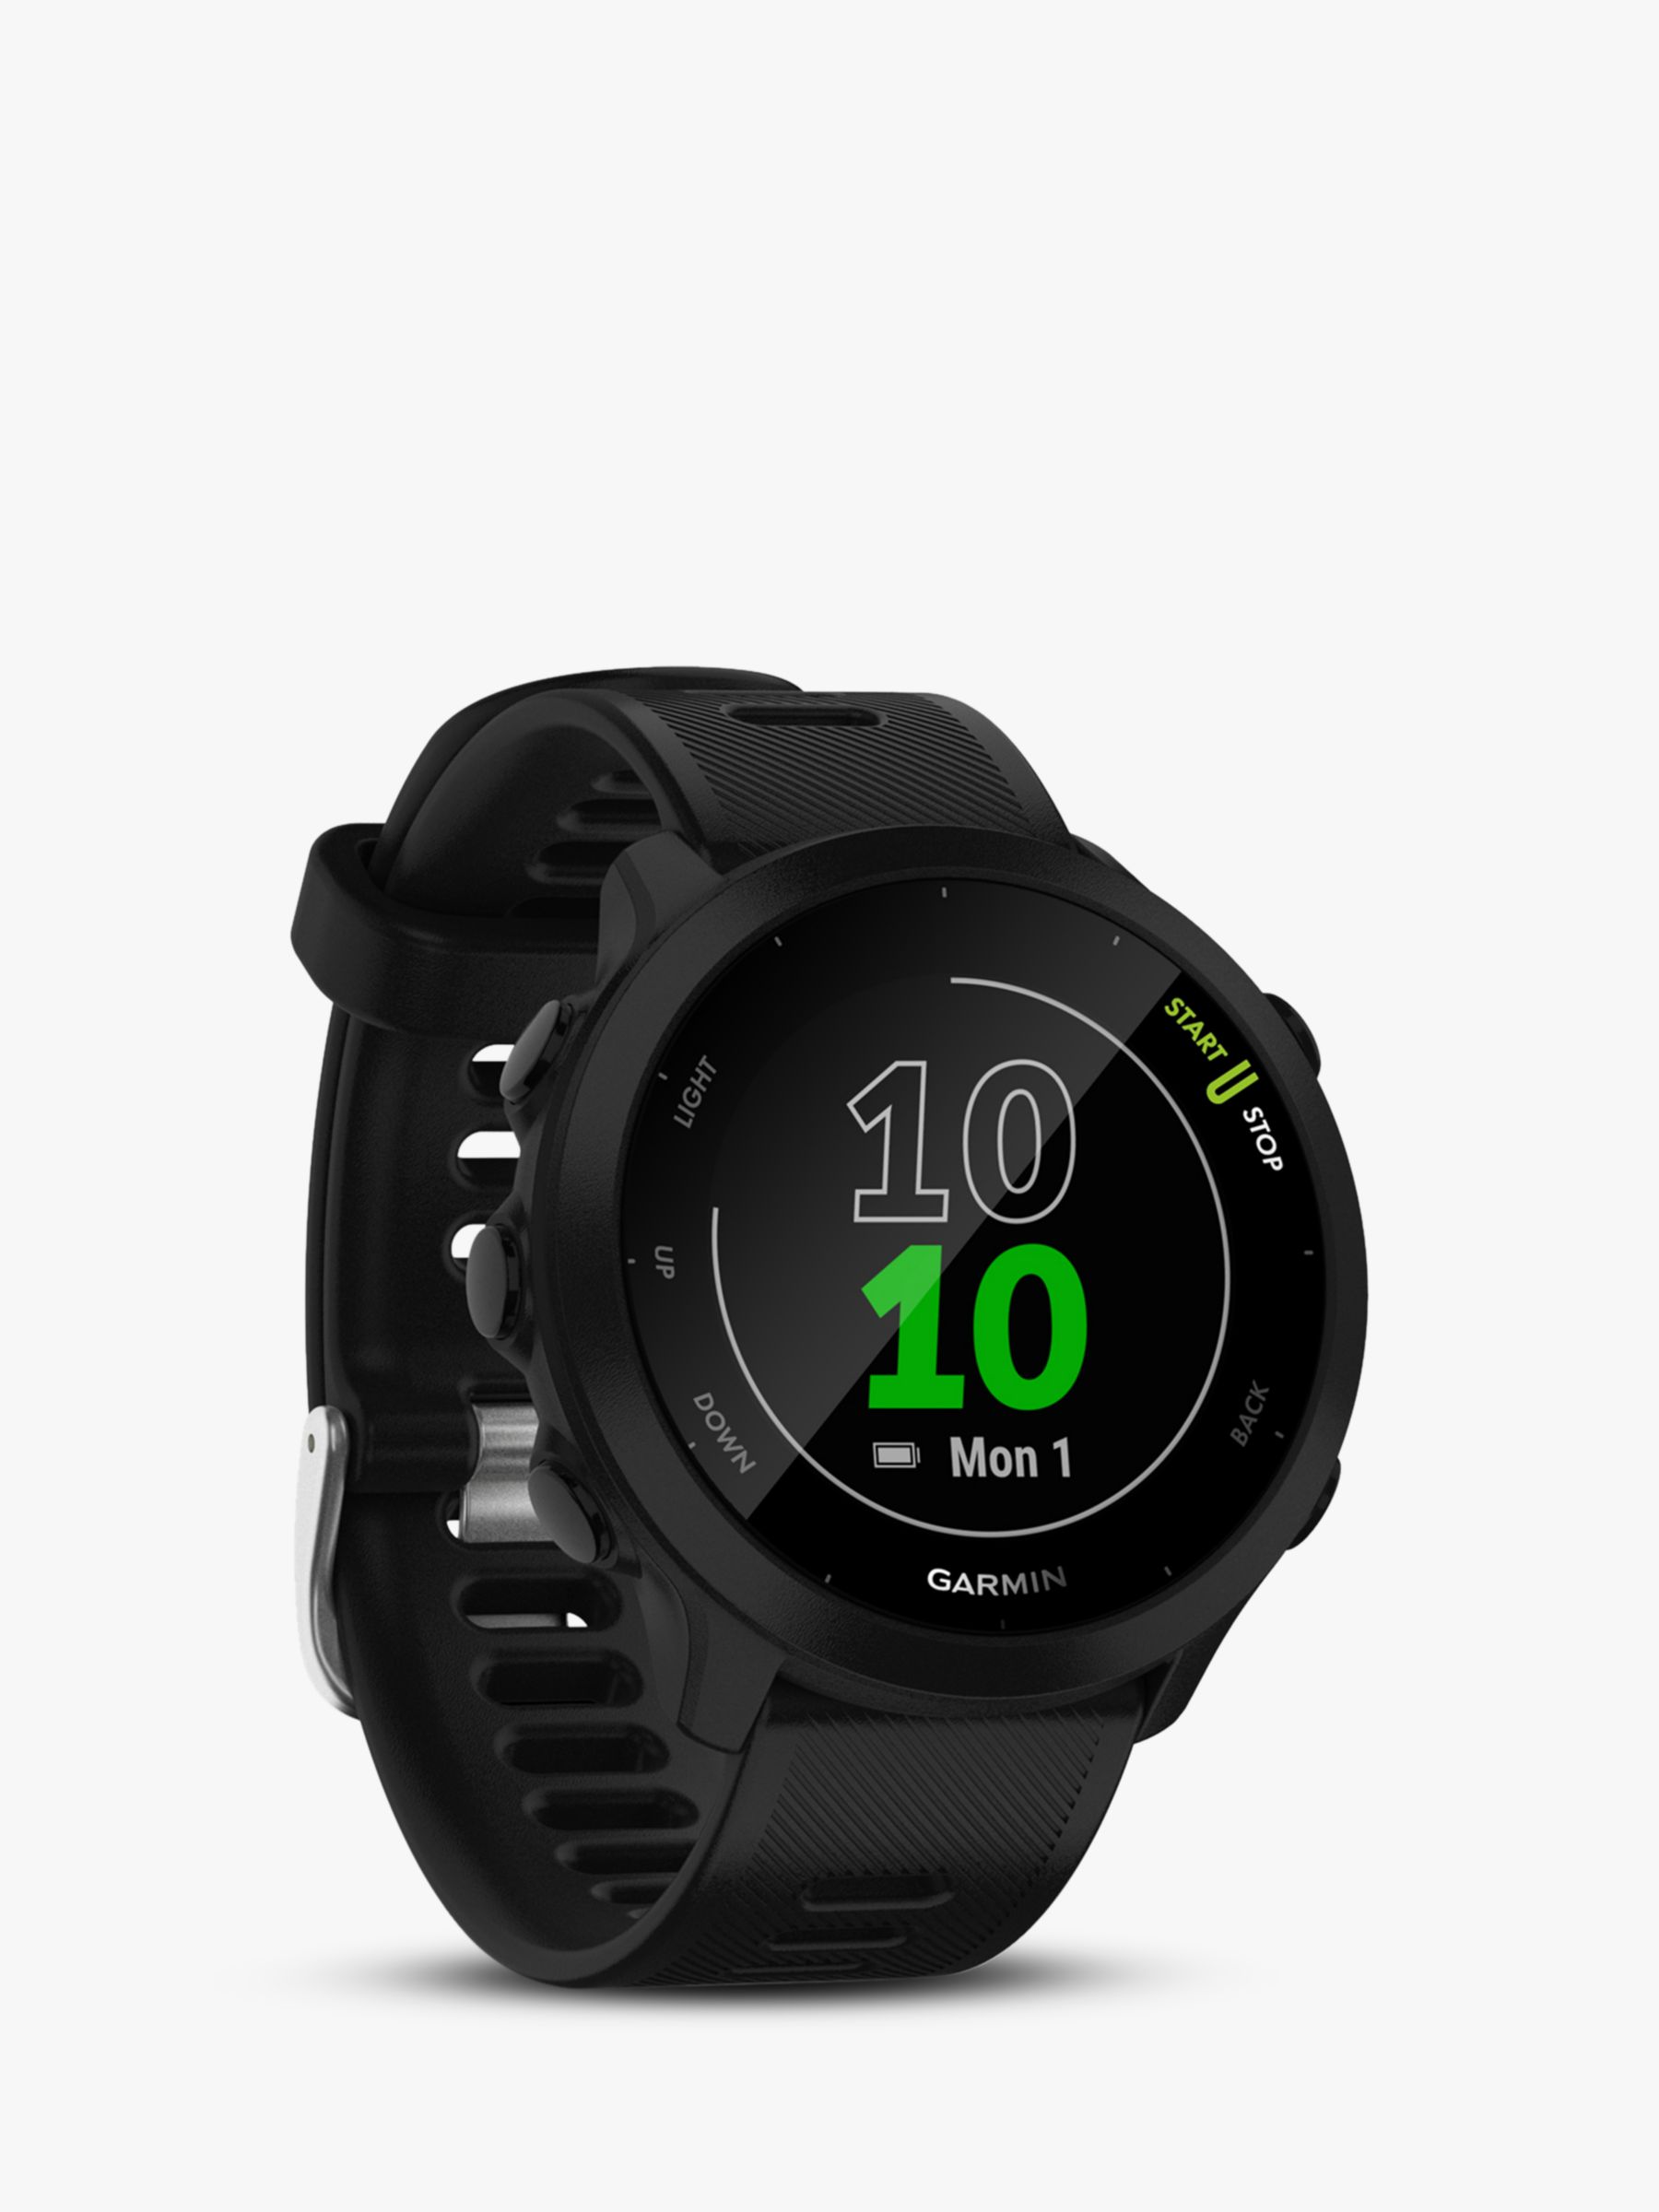  Garmin Forerunner 55, GPS Running Watch with Daily